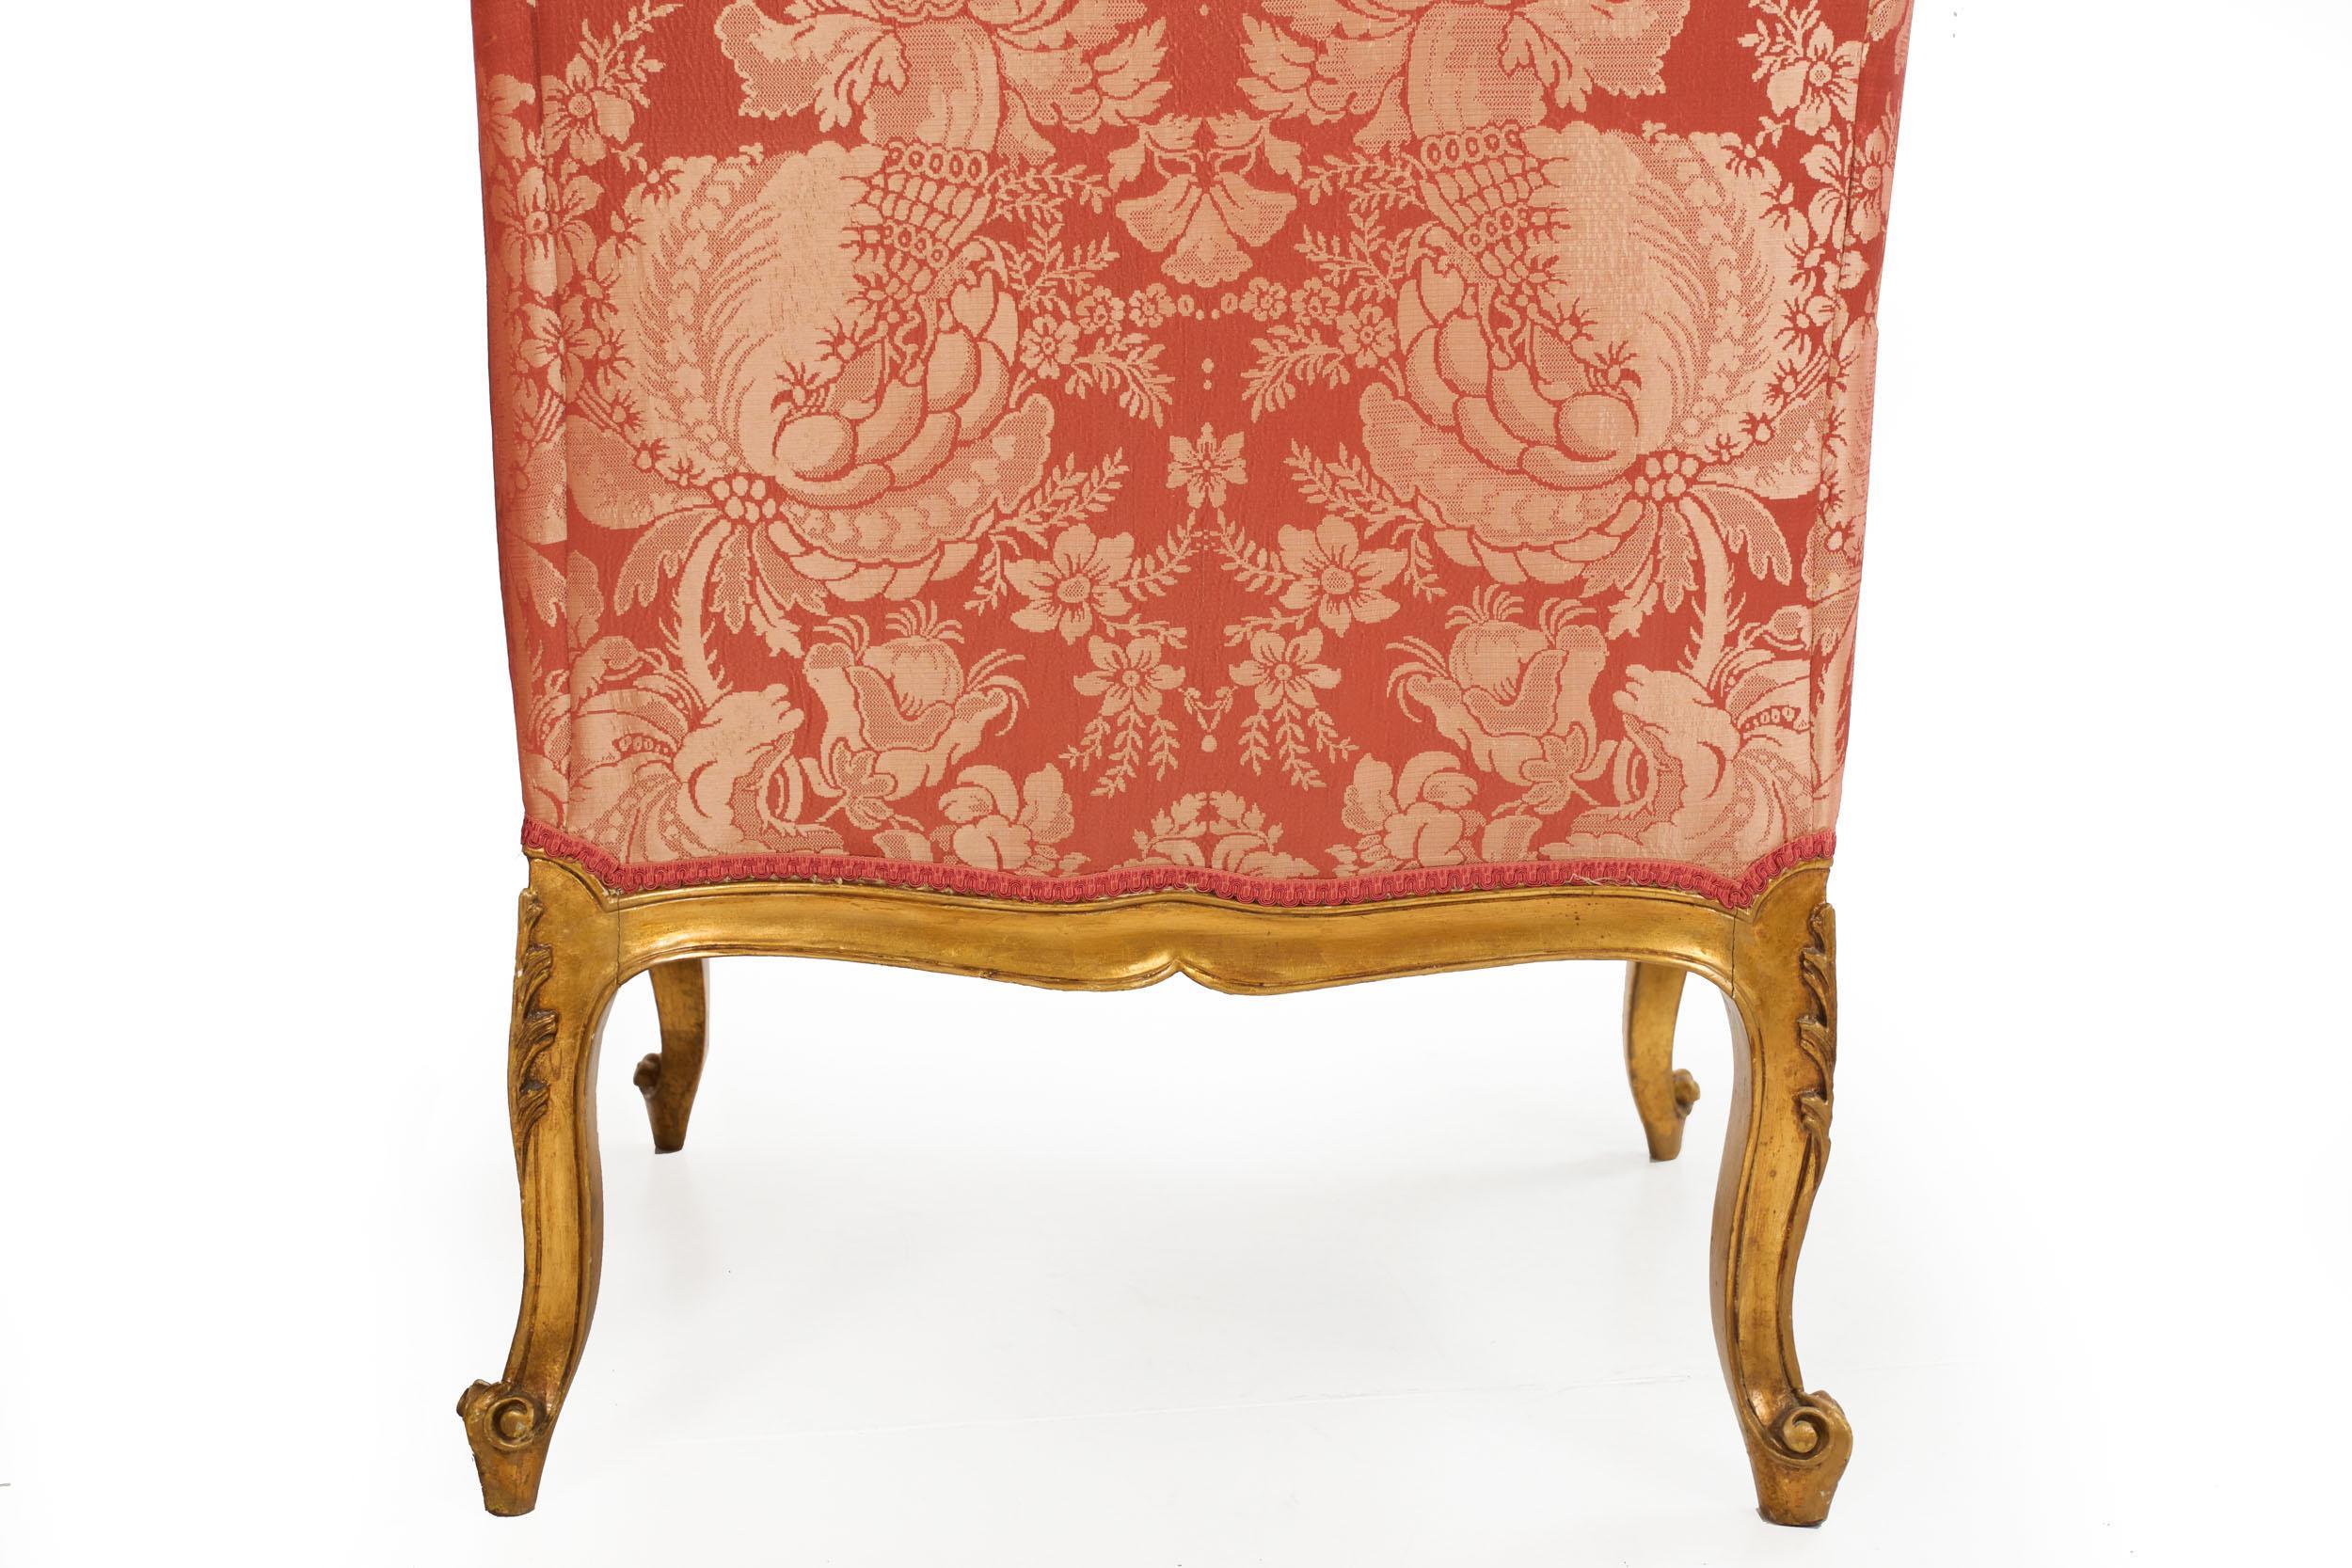 Circa 1880 French Louis XV Style Antique Arm Chairs, a Pair 3